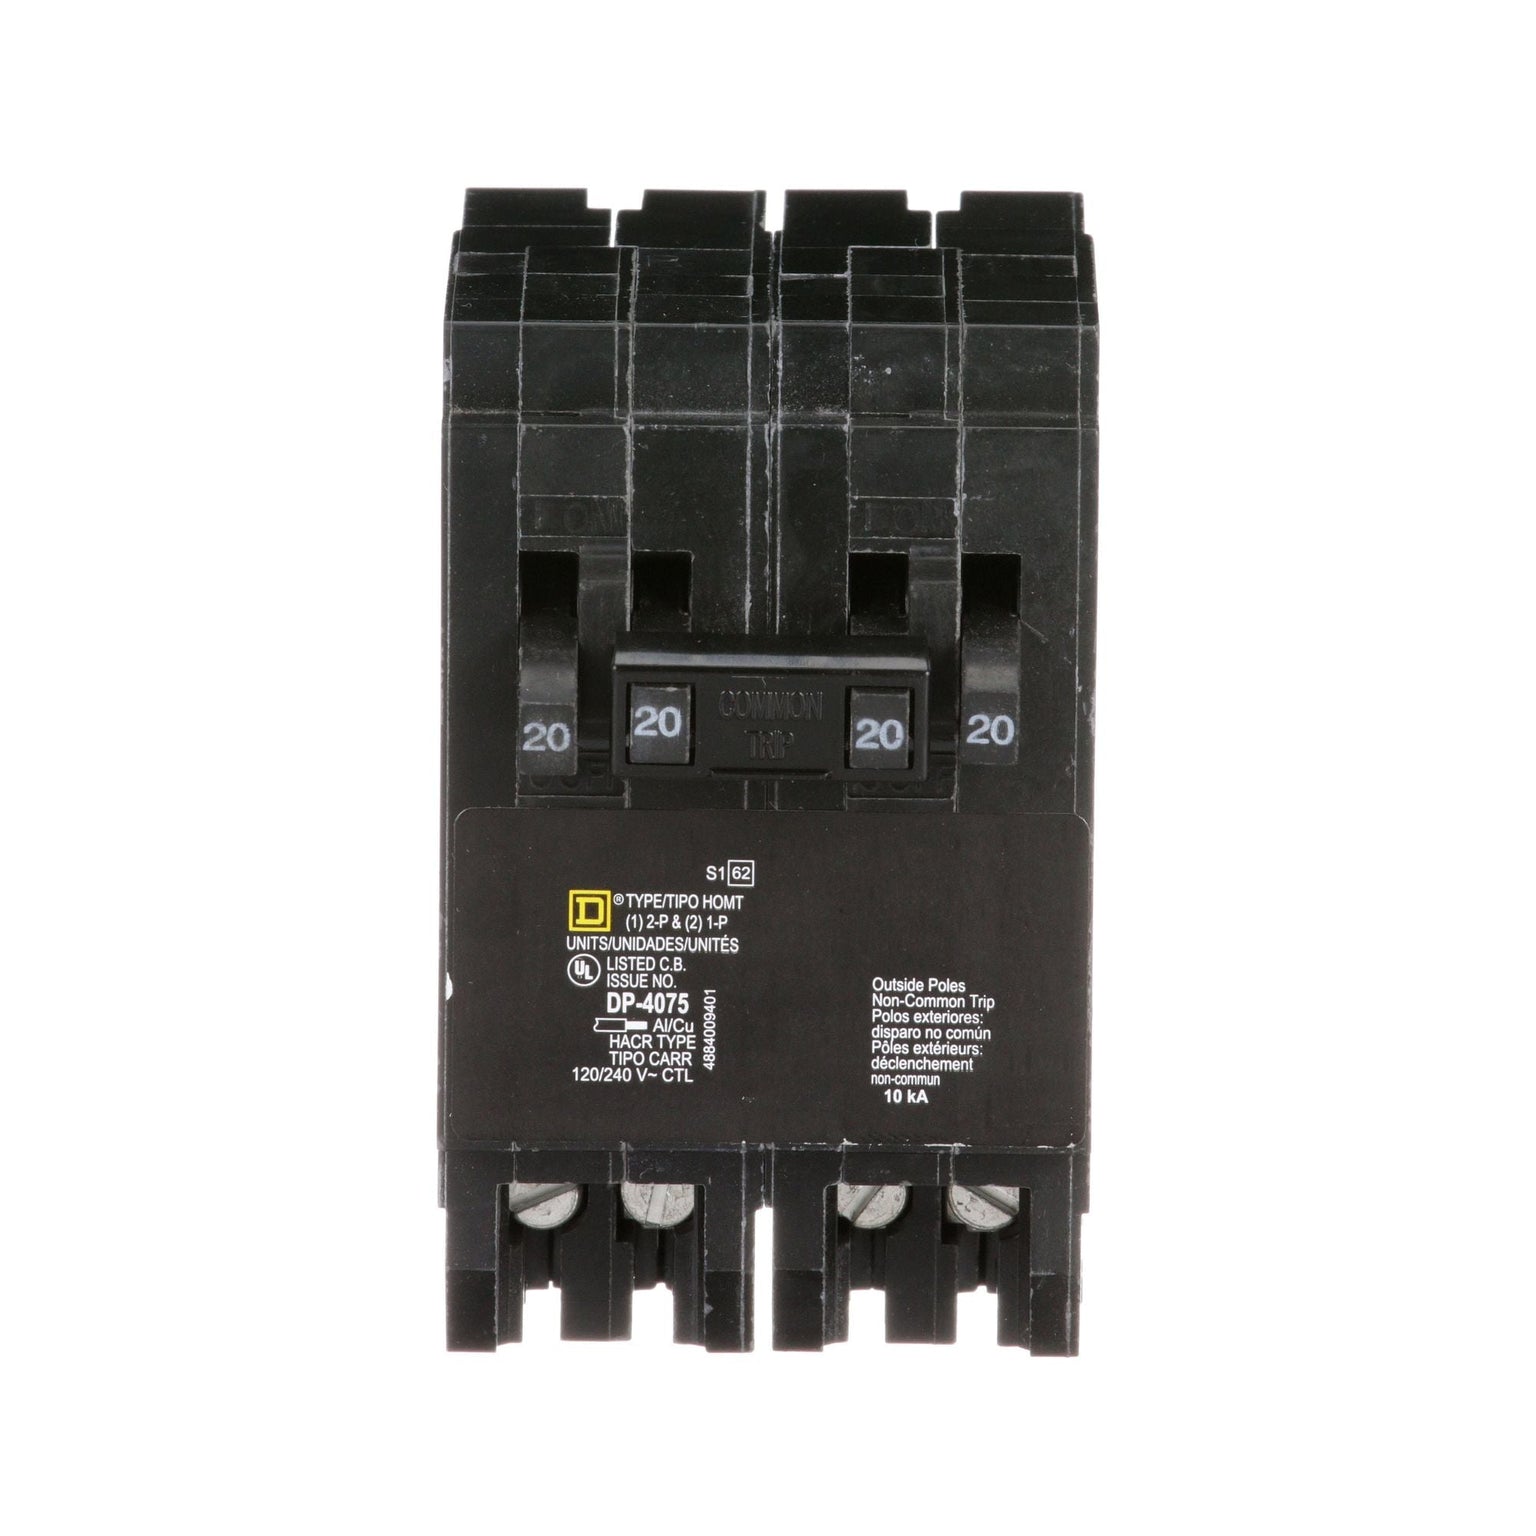 CHOMT2020220 - Square D 20 Amp 4 Pole 240 Volt Plug-In Molded Case Circuit Breaker